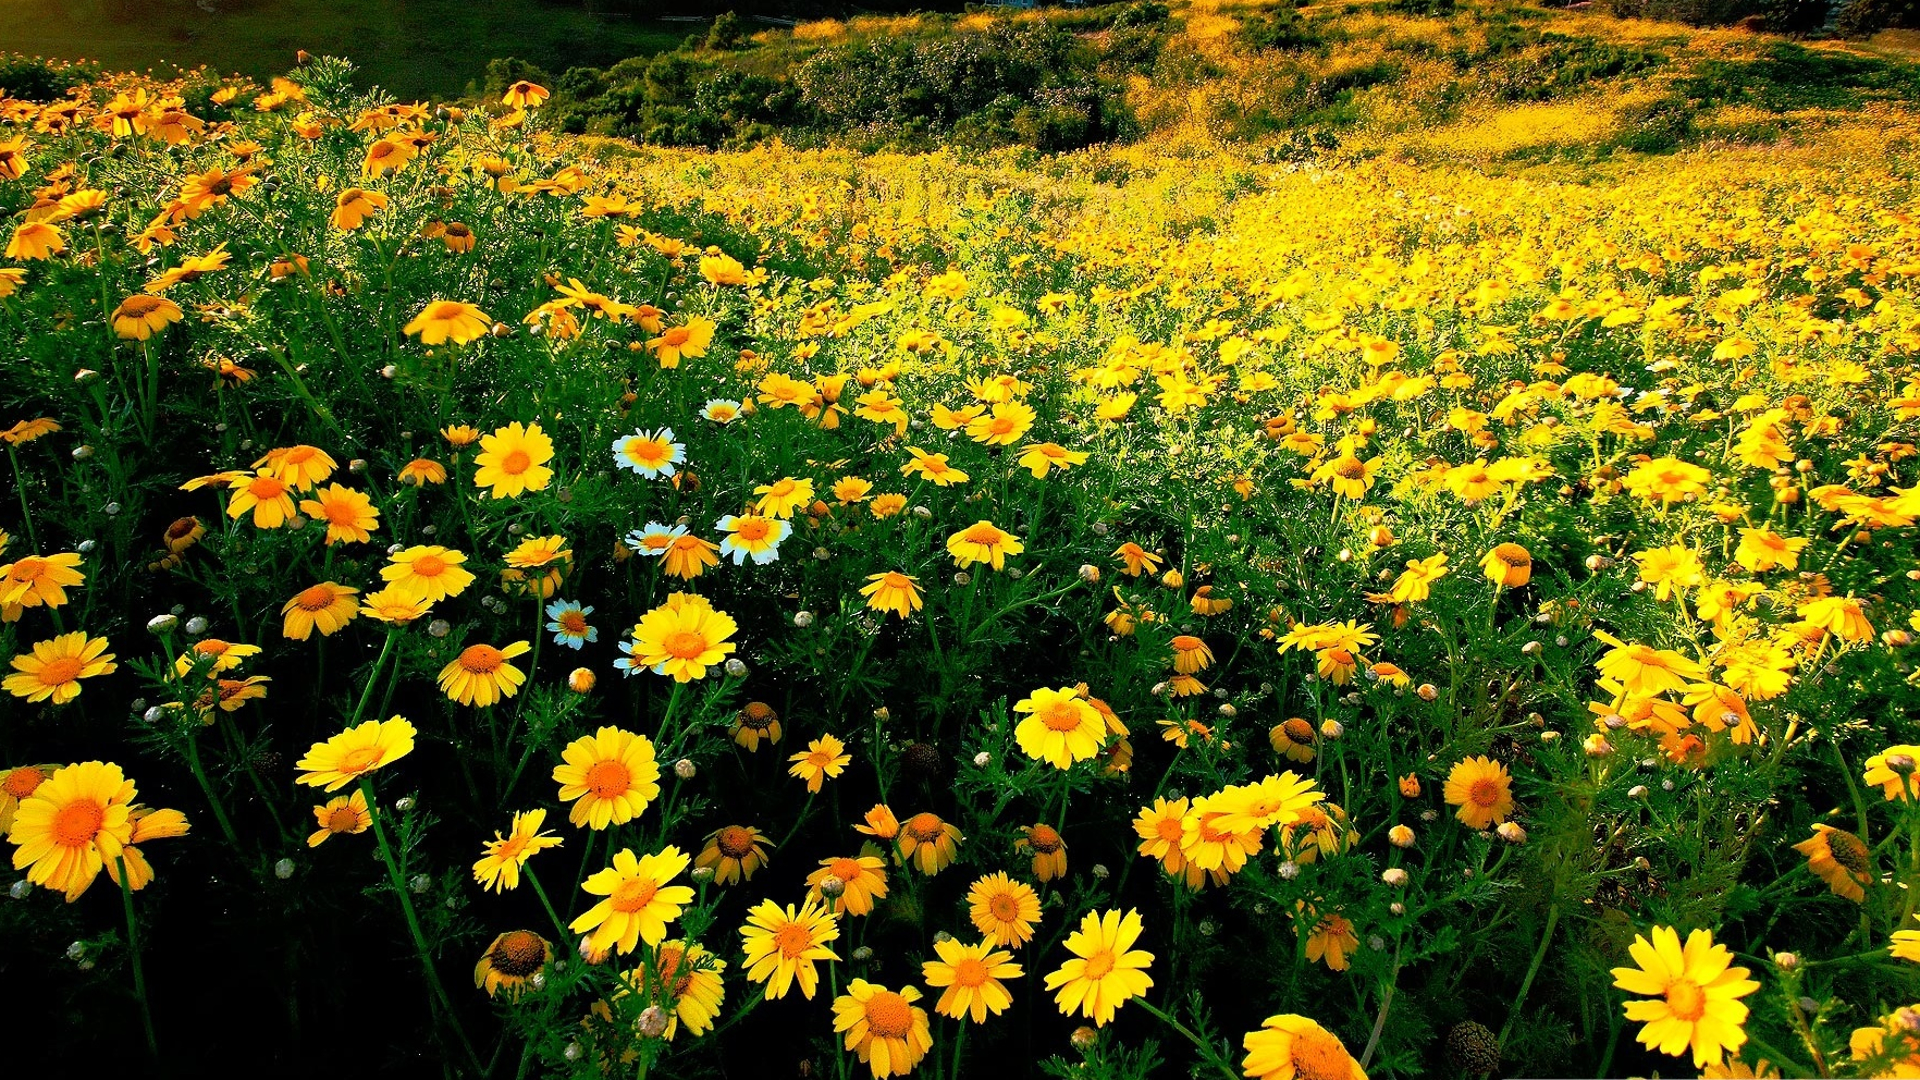 Скачать обои бесплатно Цветок, Весна, Ландшафт, Желтый Цветок, Земля/природа, Флауэрсы картинка на рабочий стол ПК